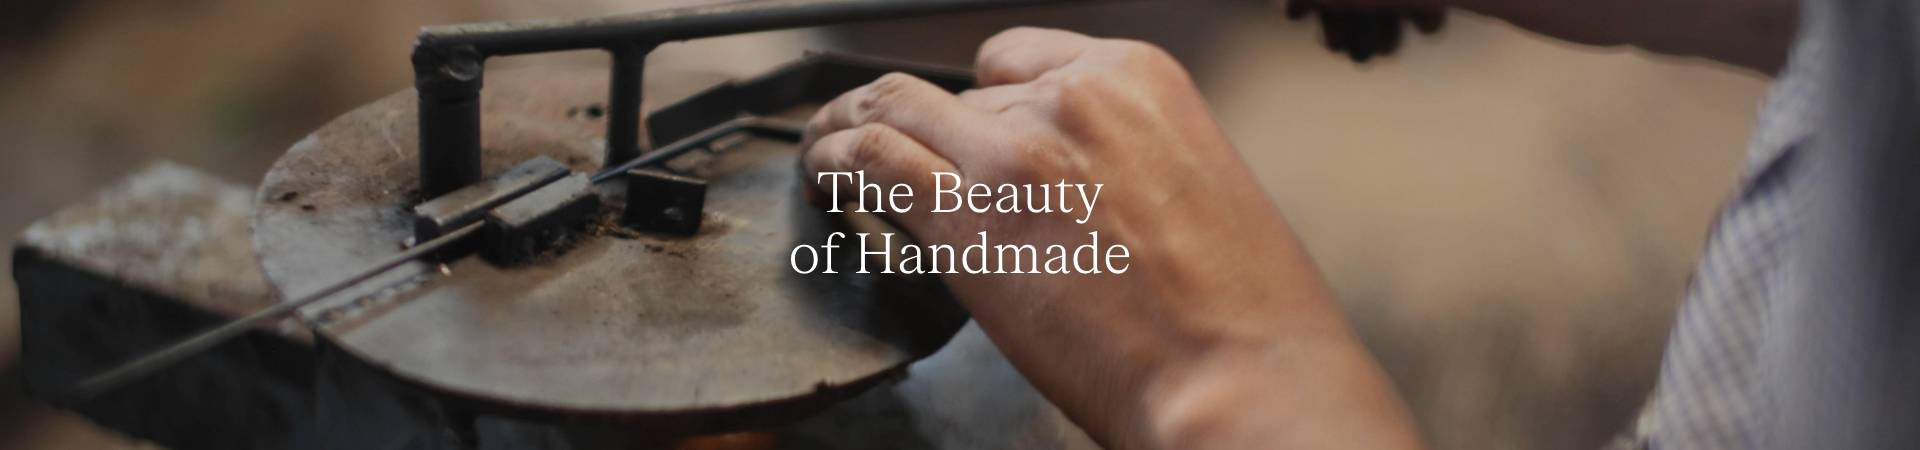 The Beauty of Handmade.jpg